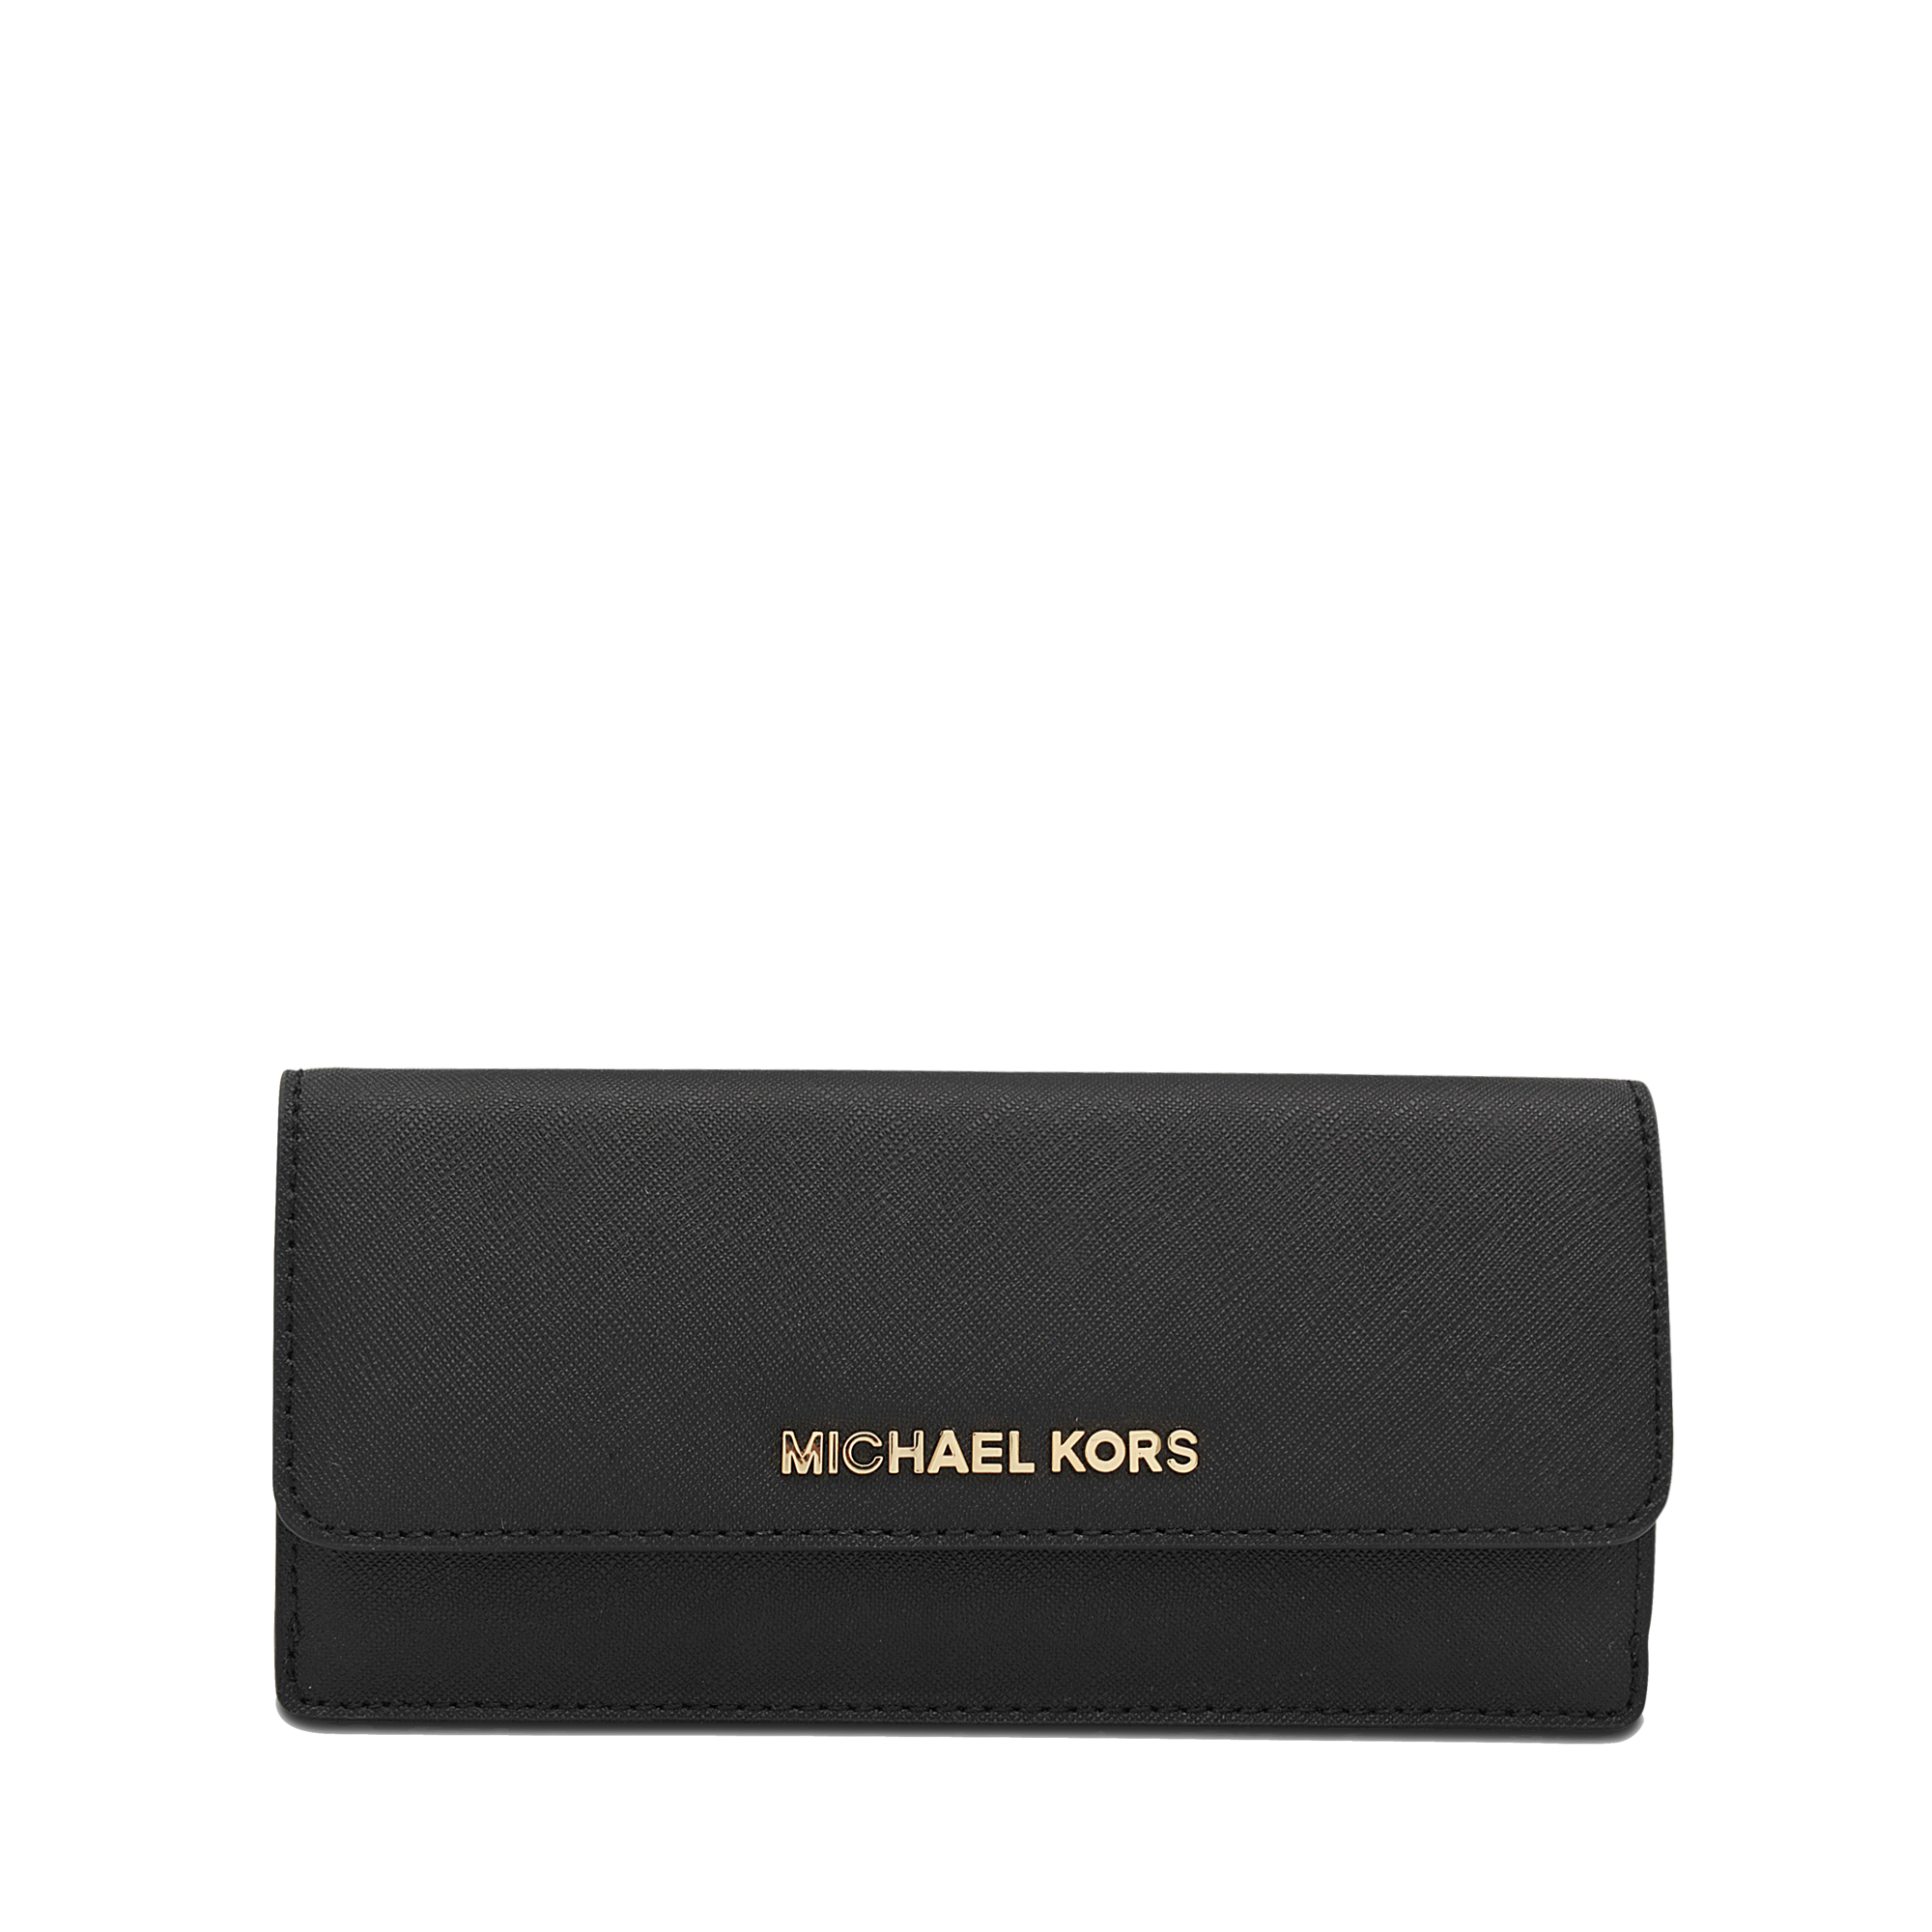 michael kors flat wallet leather